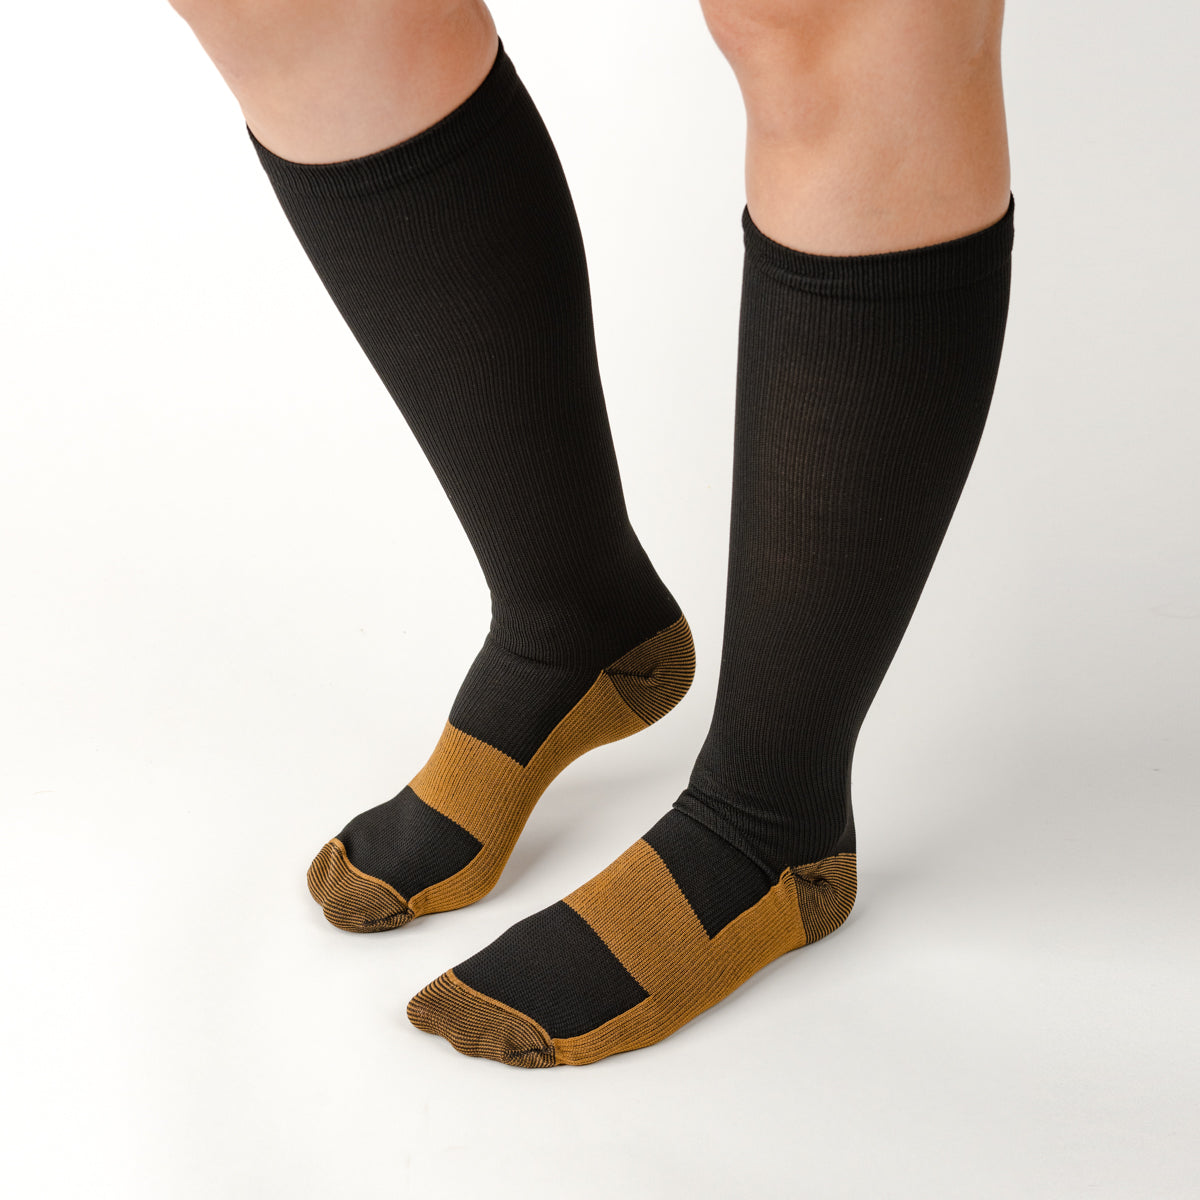  2 Pairs Copper Compression Socks Toe Open Leg Support